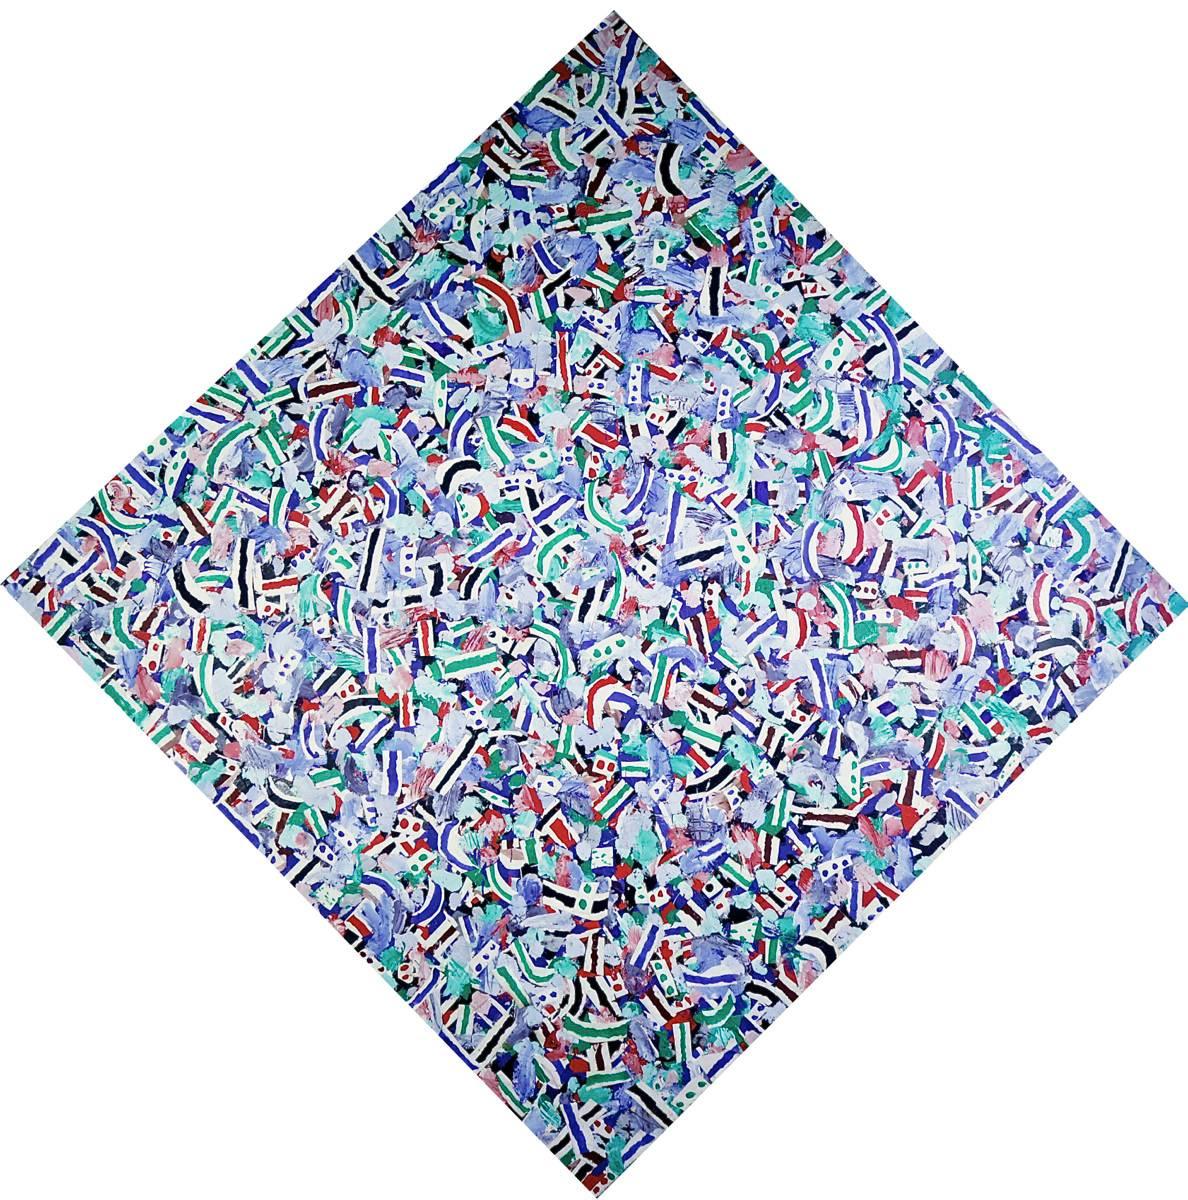 Joseph Glasco Abstract Painting - Big Diamond, 1980